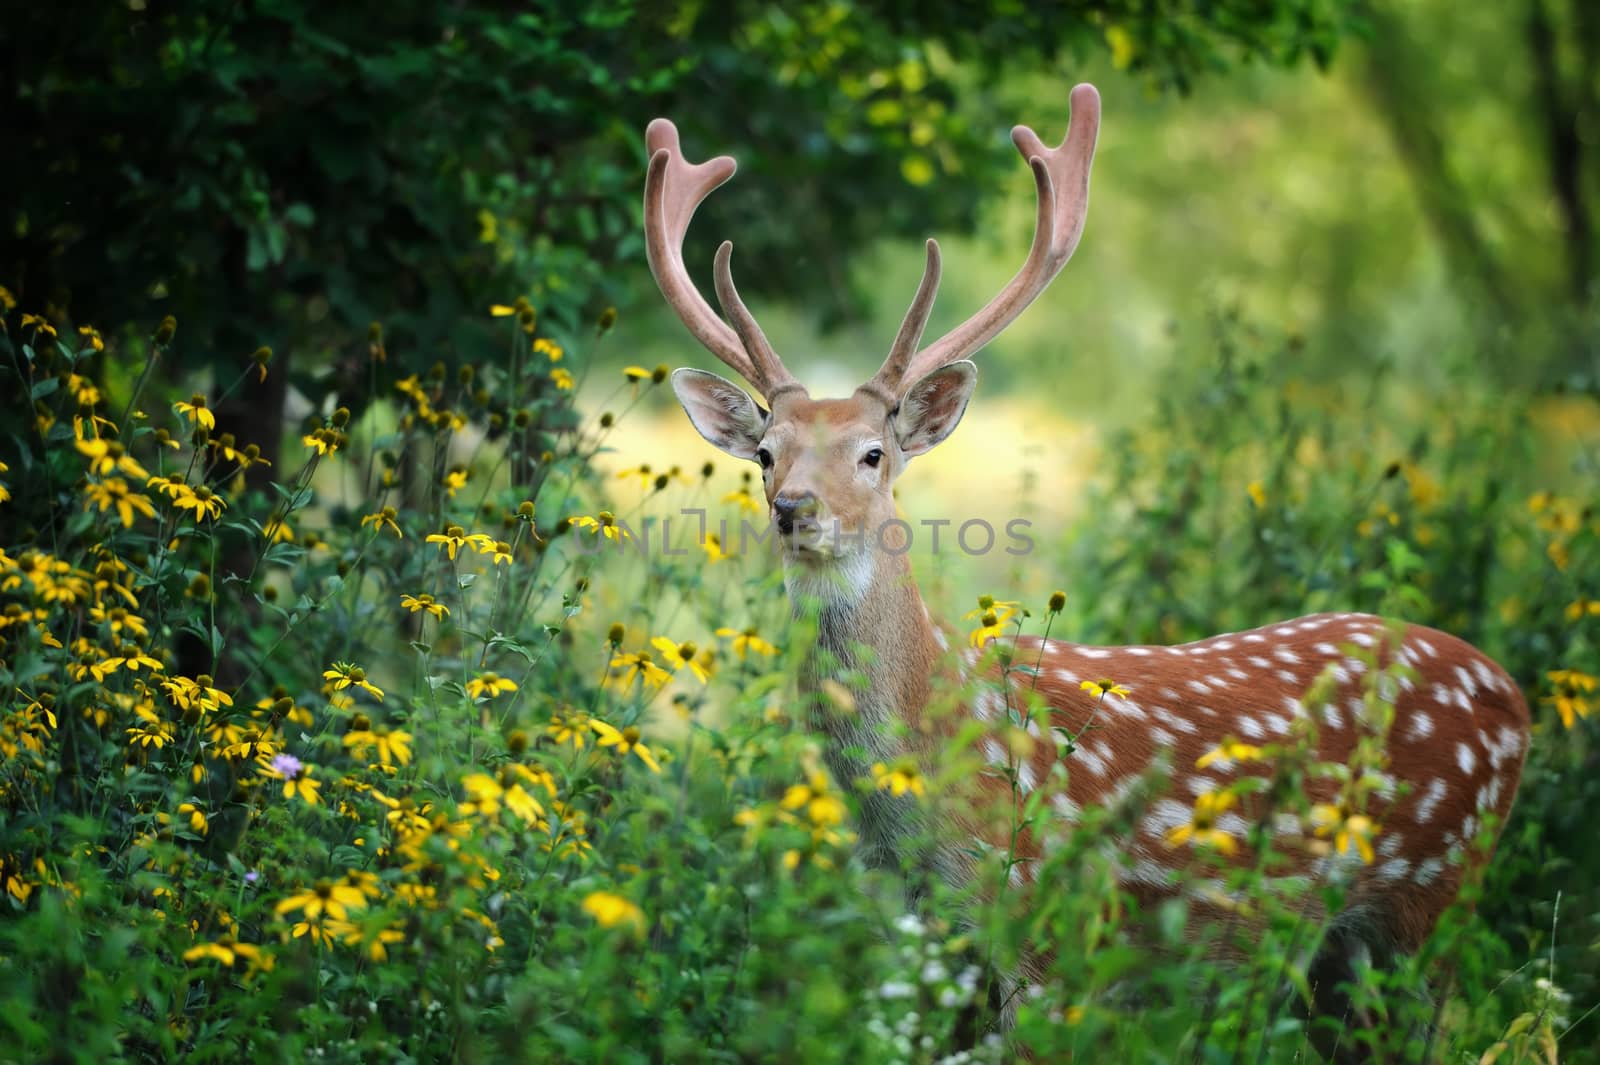 Whitetail Deer standing in summer wood